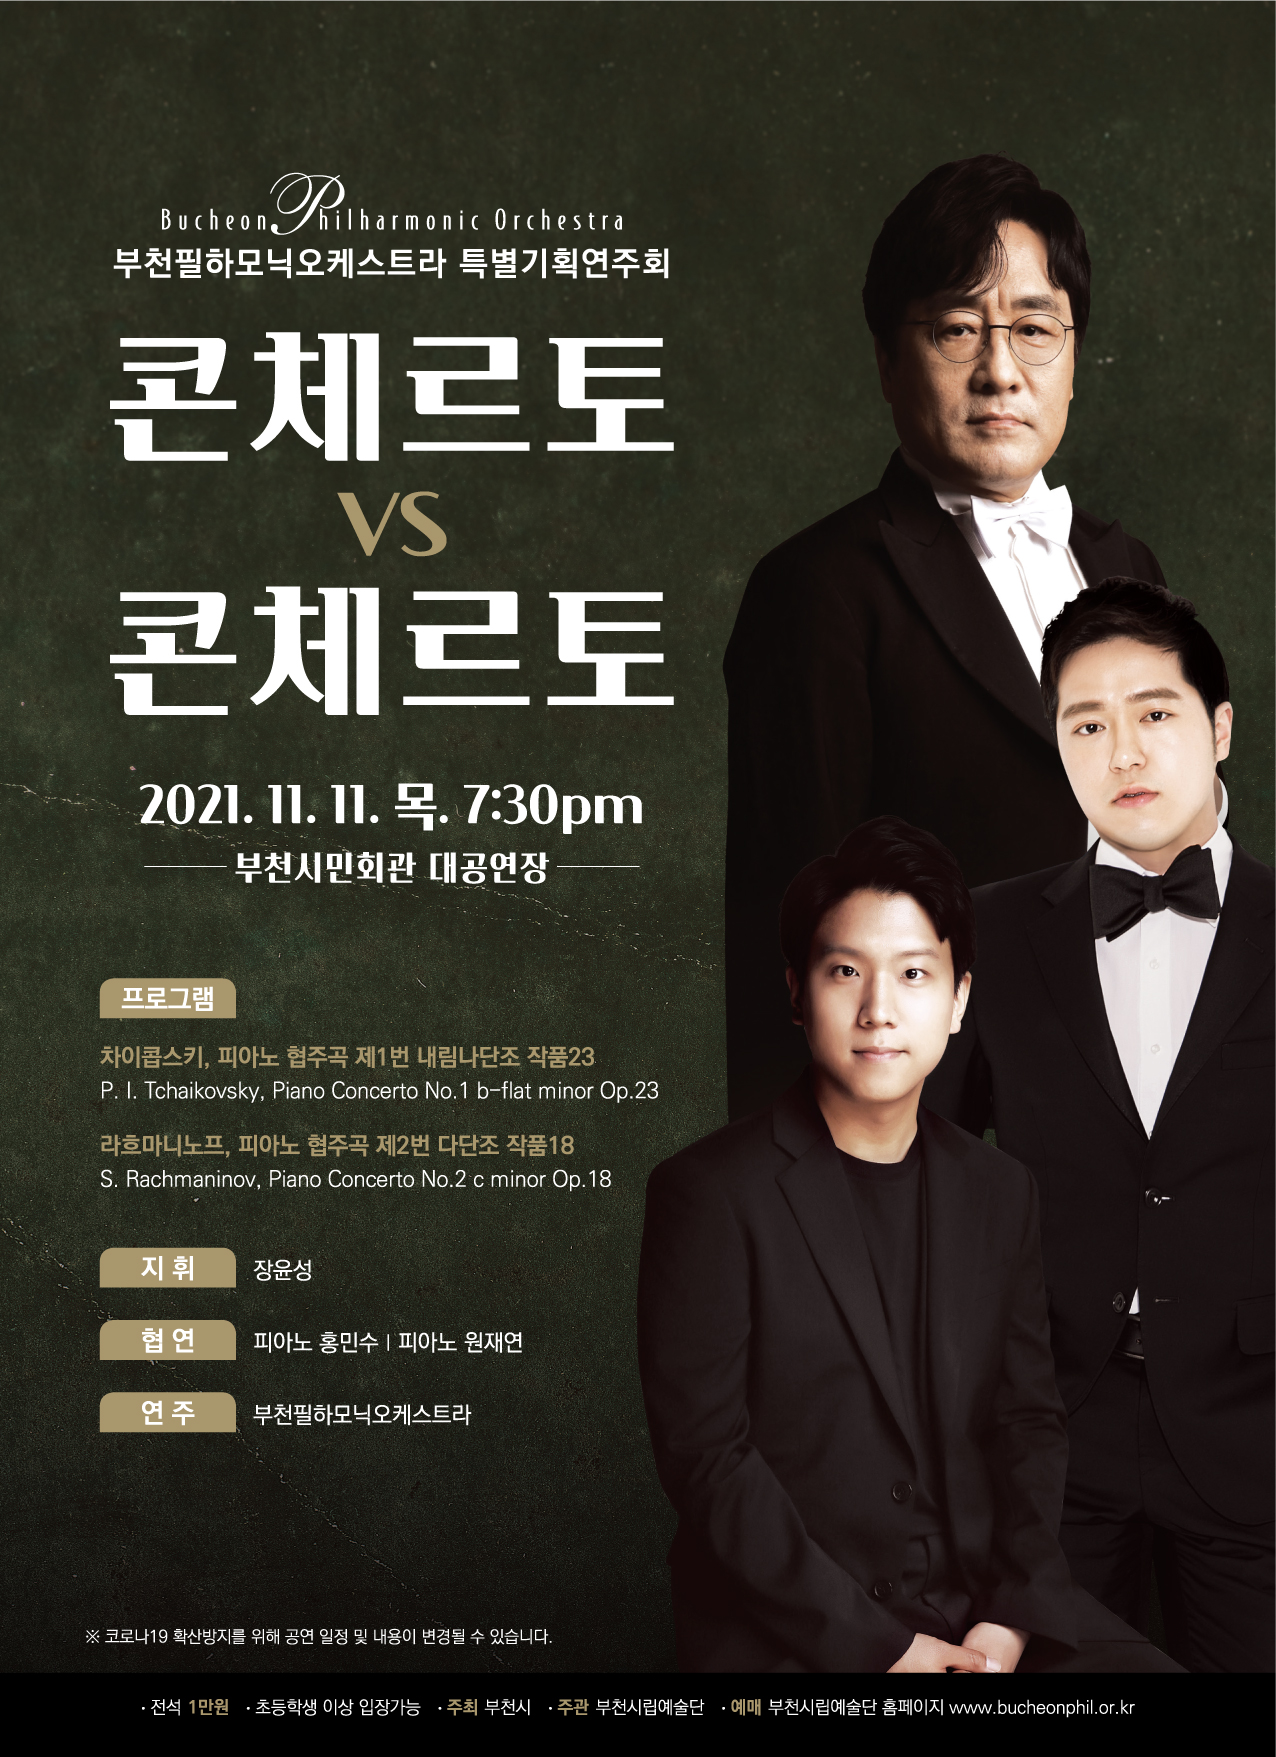 [11.11]Bucheon Philharmonic Orchestra Special Concert - Concerto vs Concerto